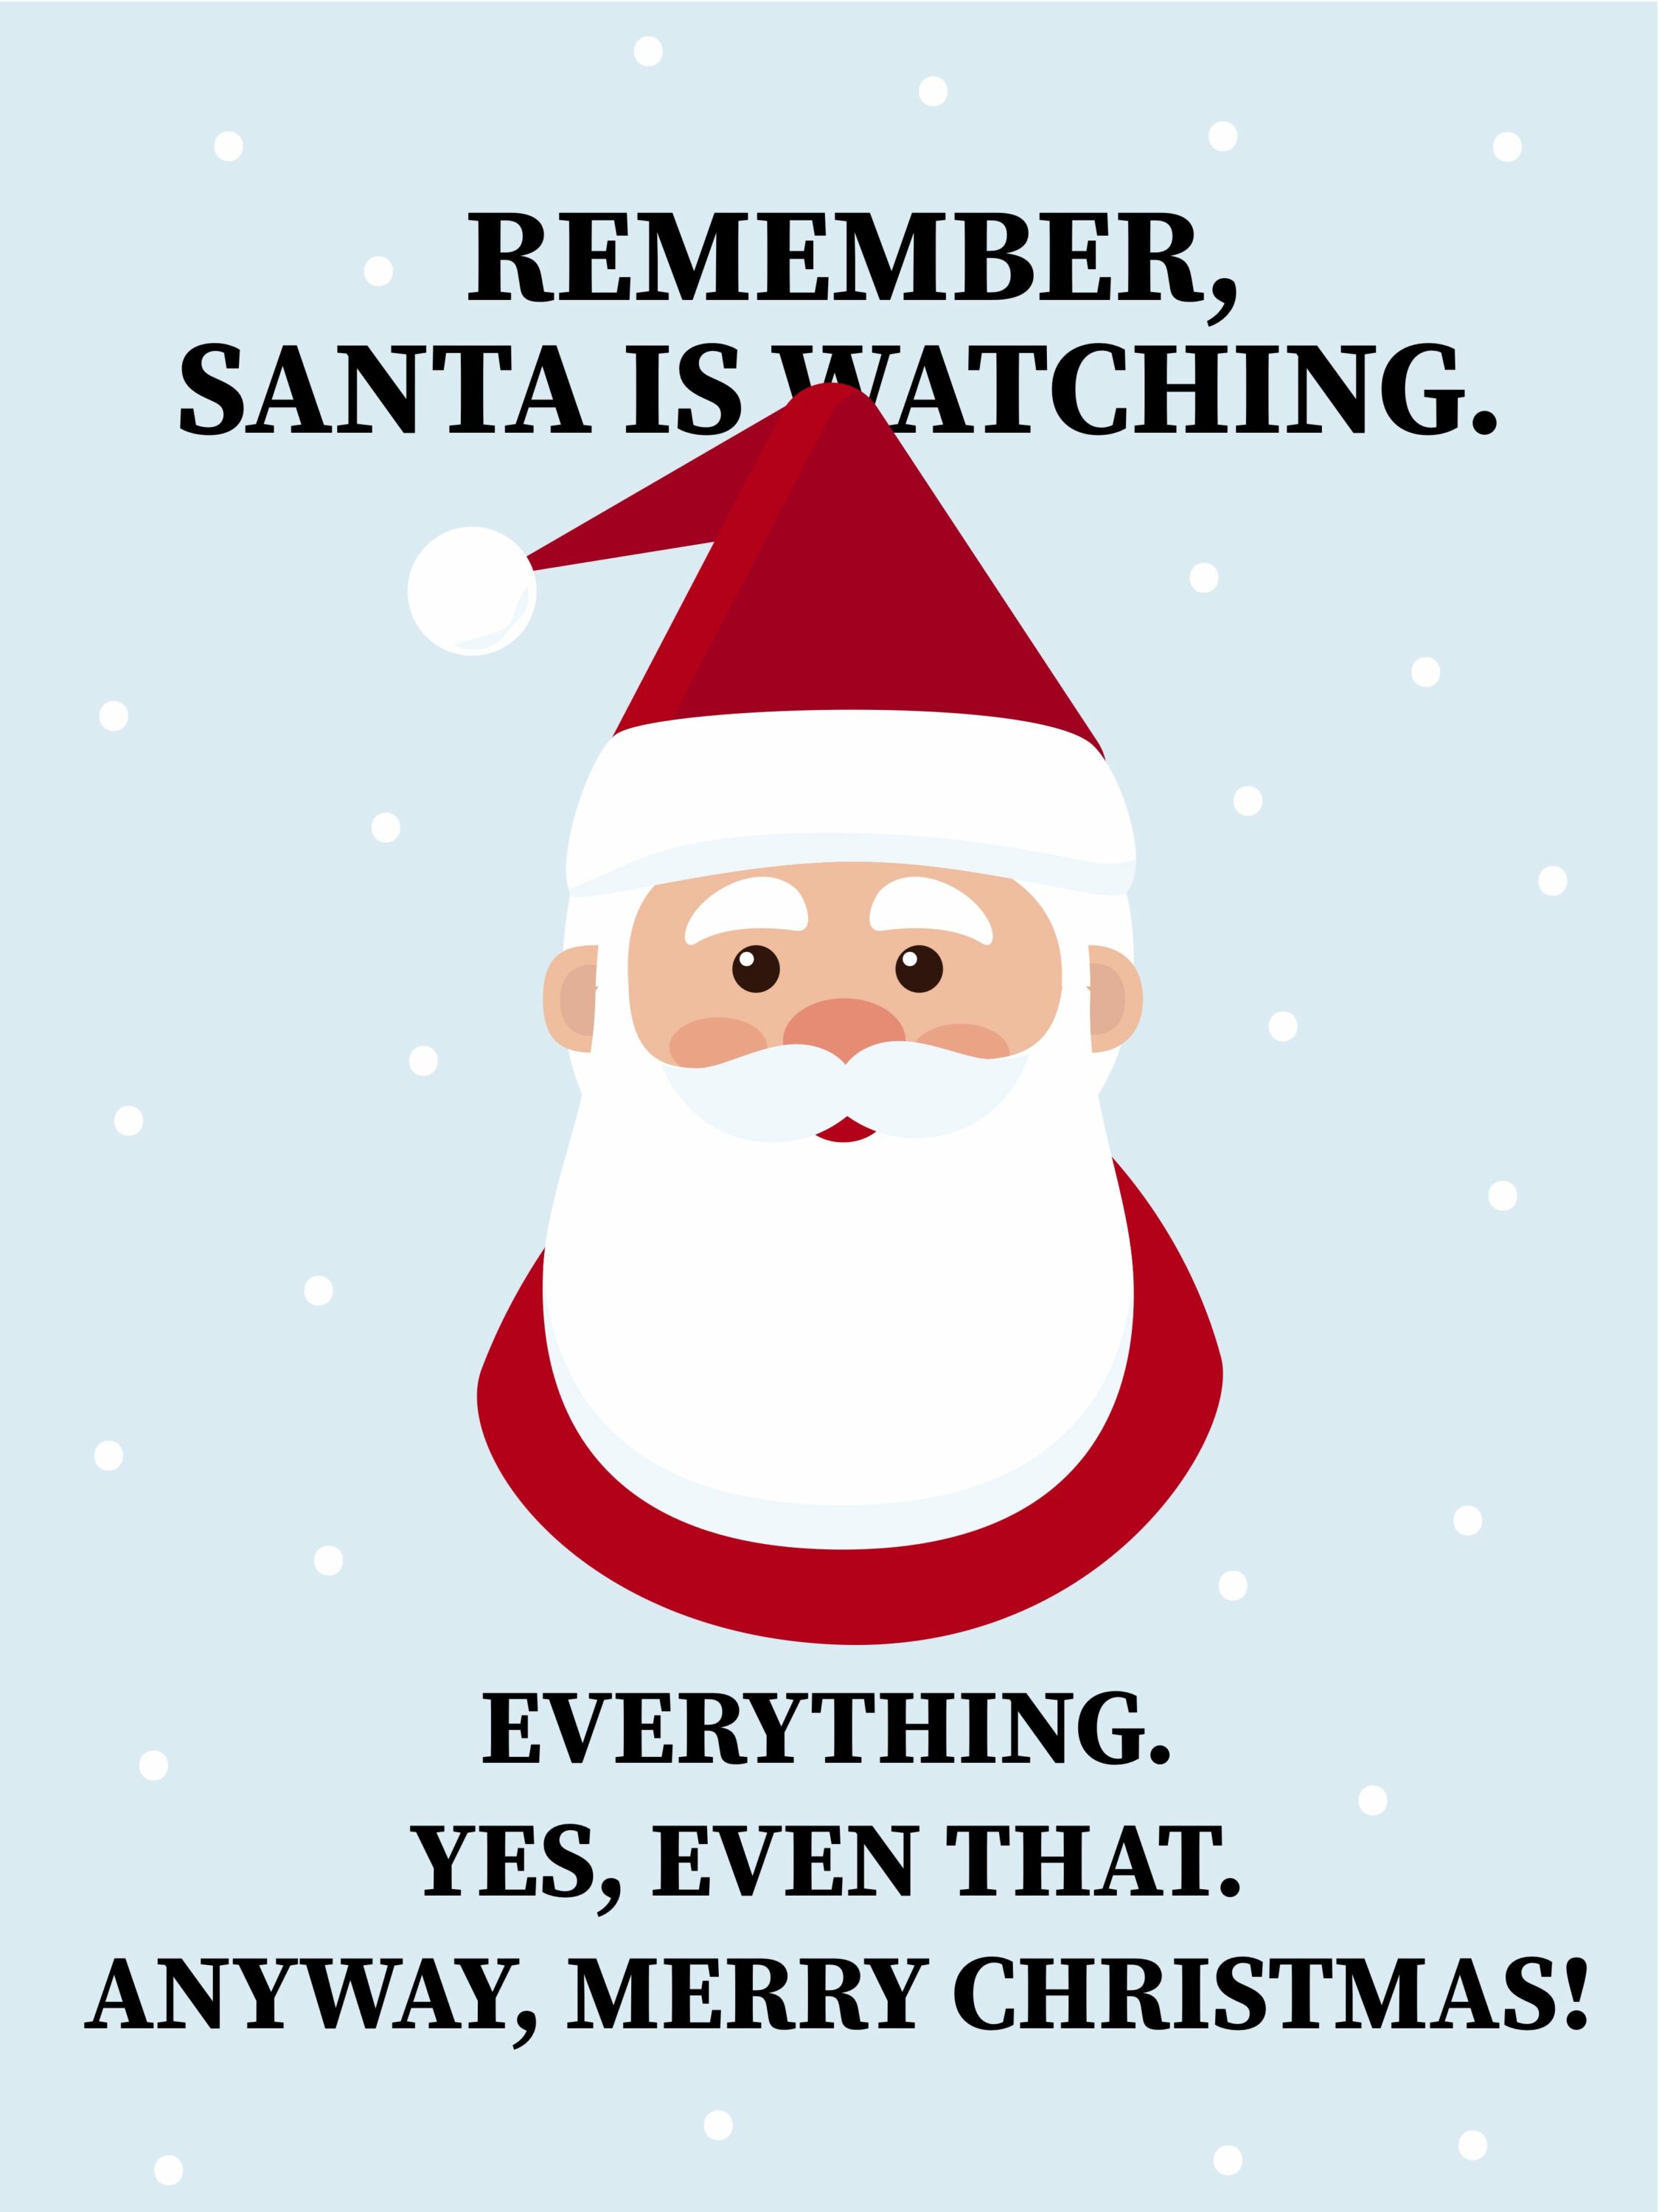 Free Christmas Postcard: Remember, Santa is Watching.